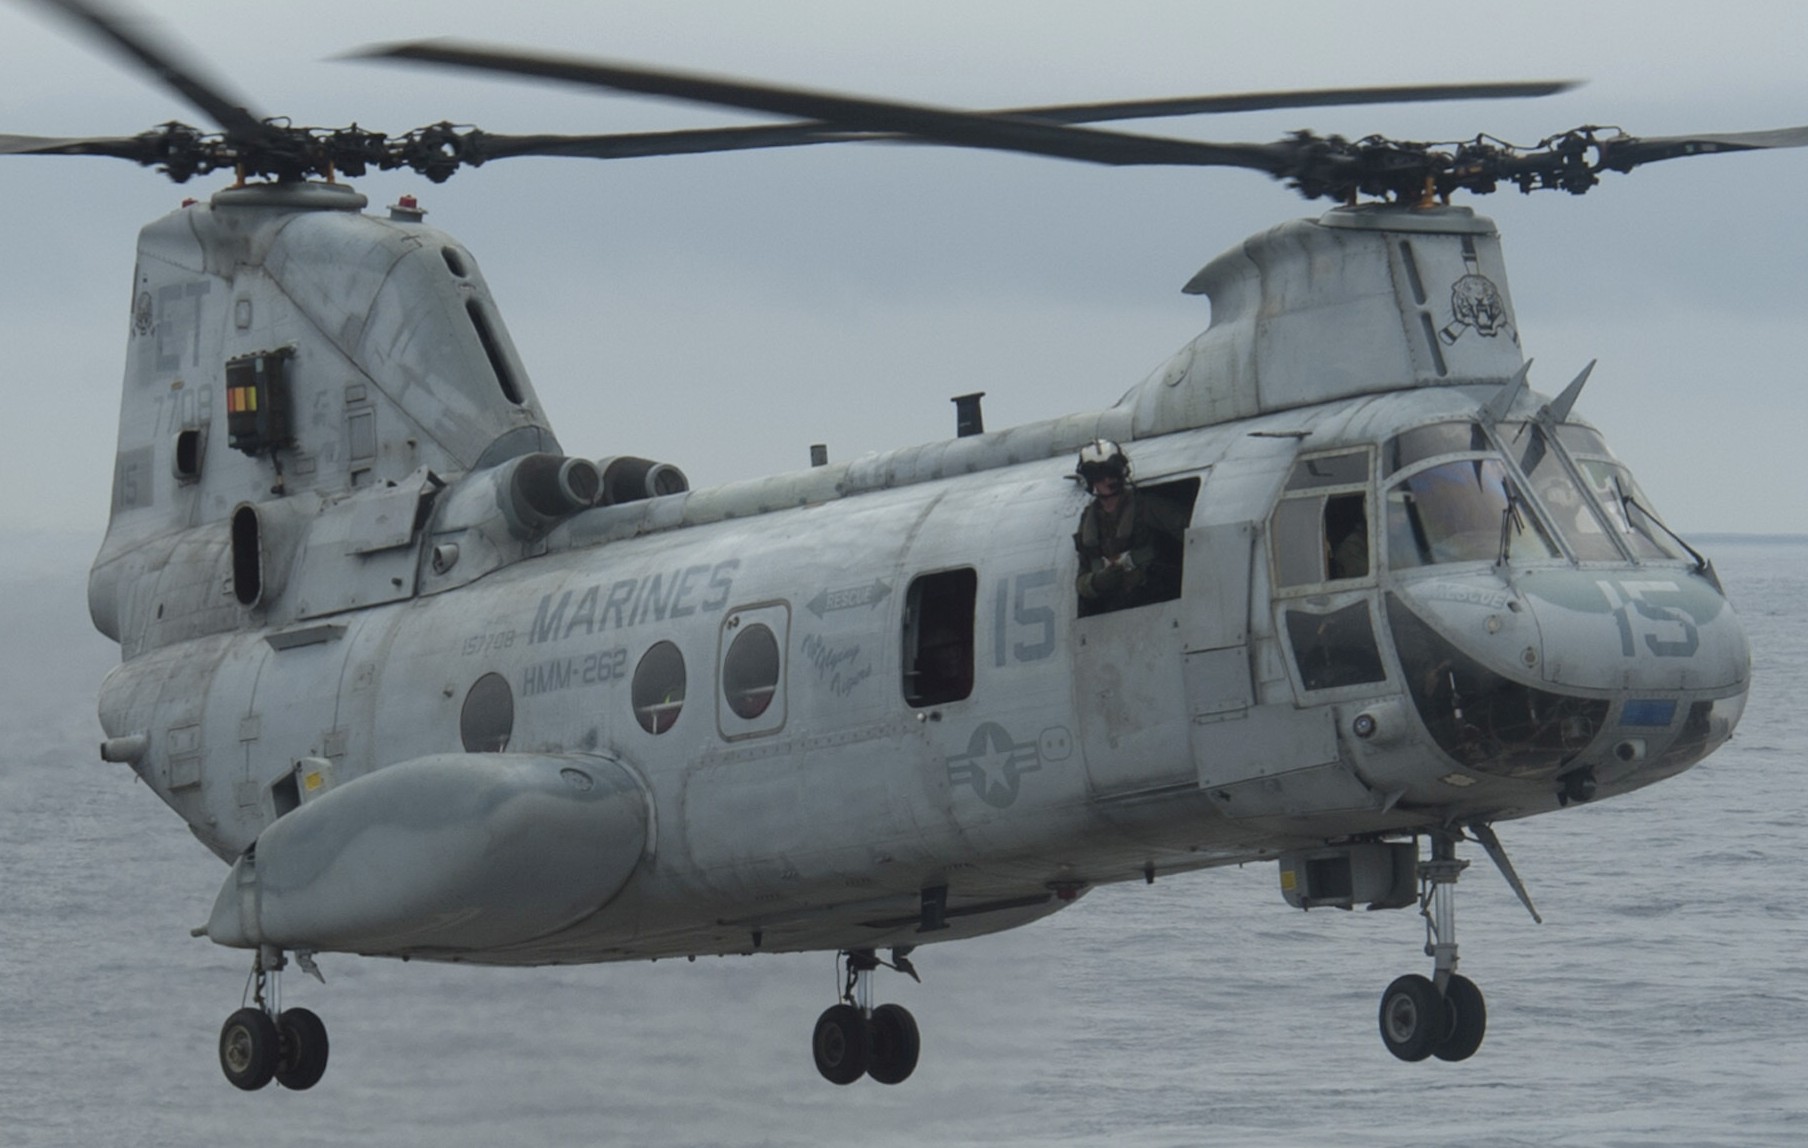 hmm-262 flying tigers ch-46e sea knight marine medium helicopter squadron usmc lsd-46 uss tortuga 89